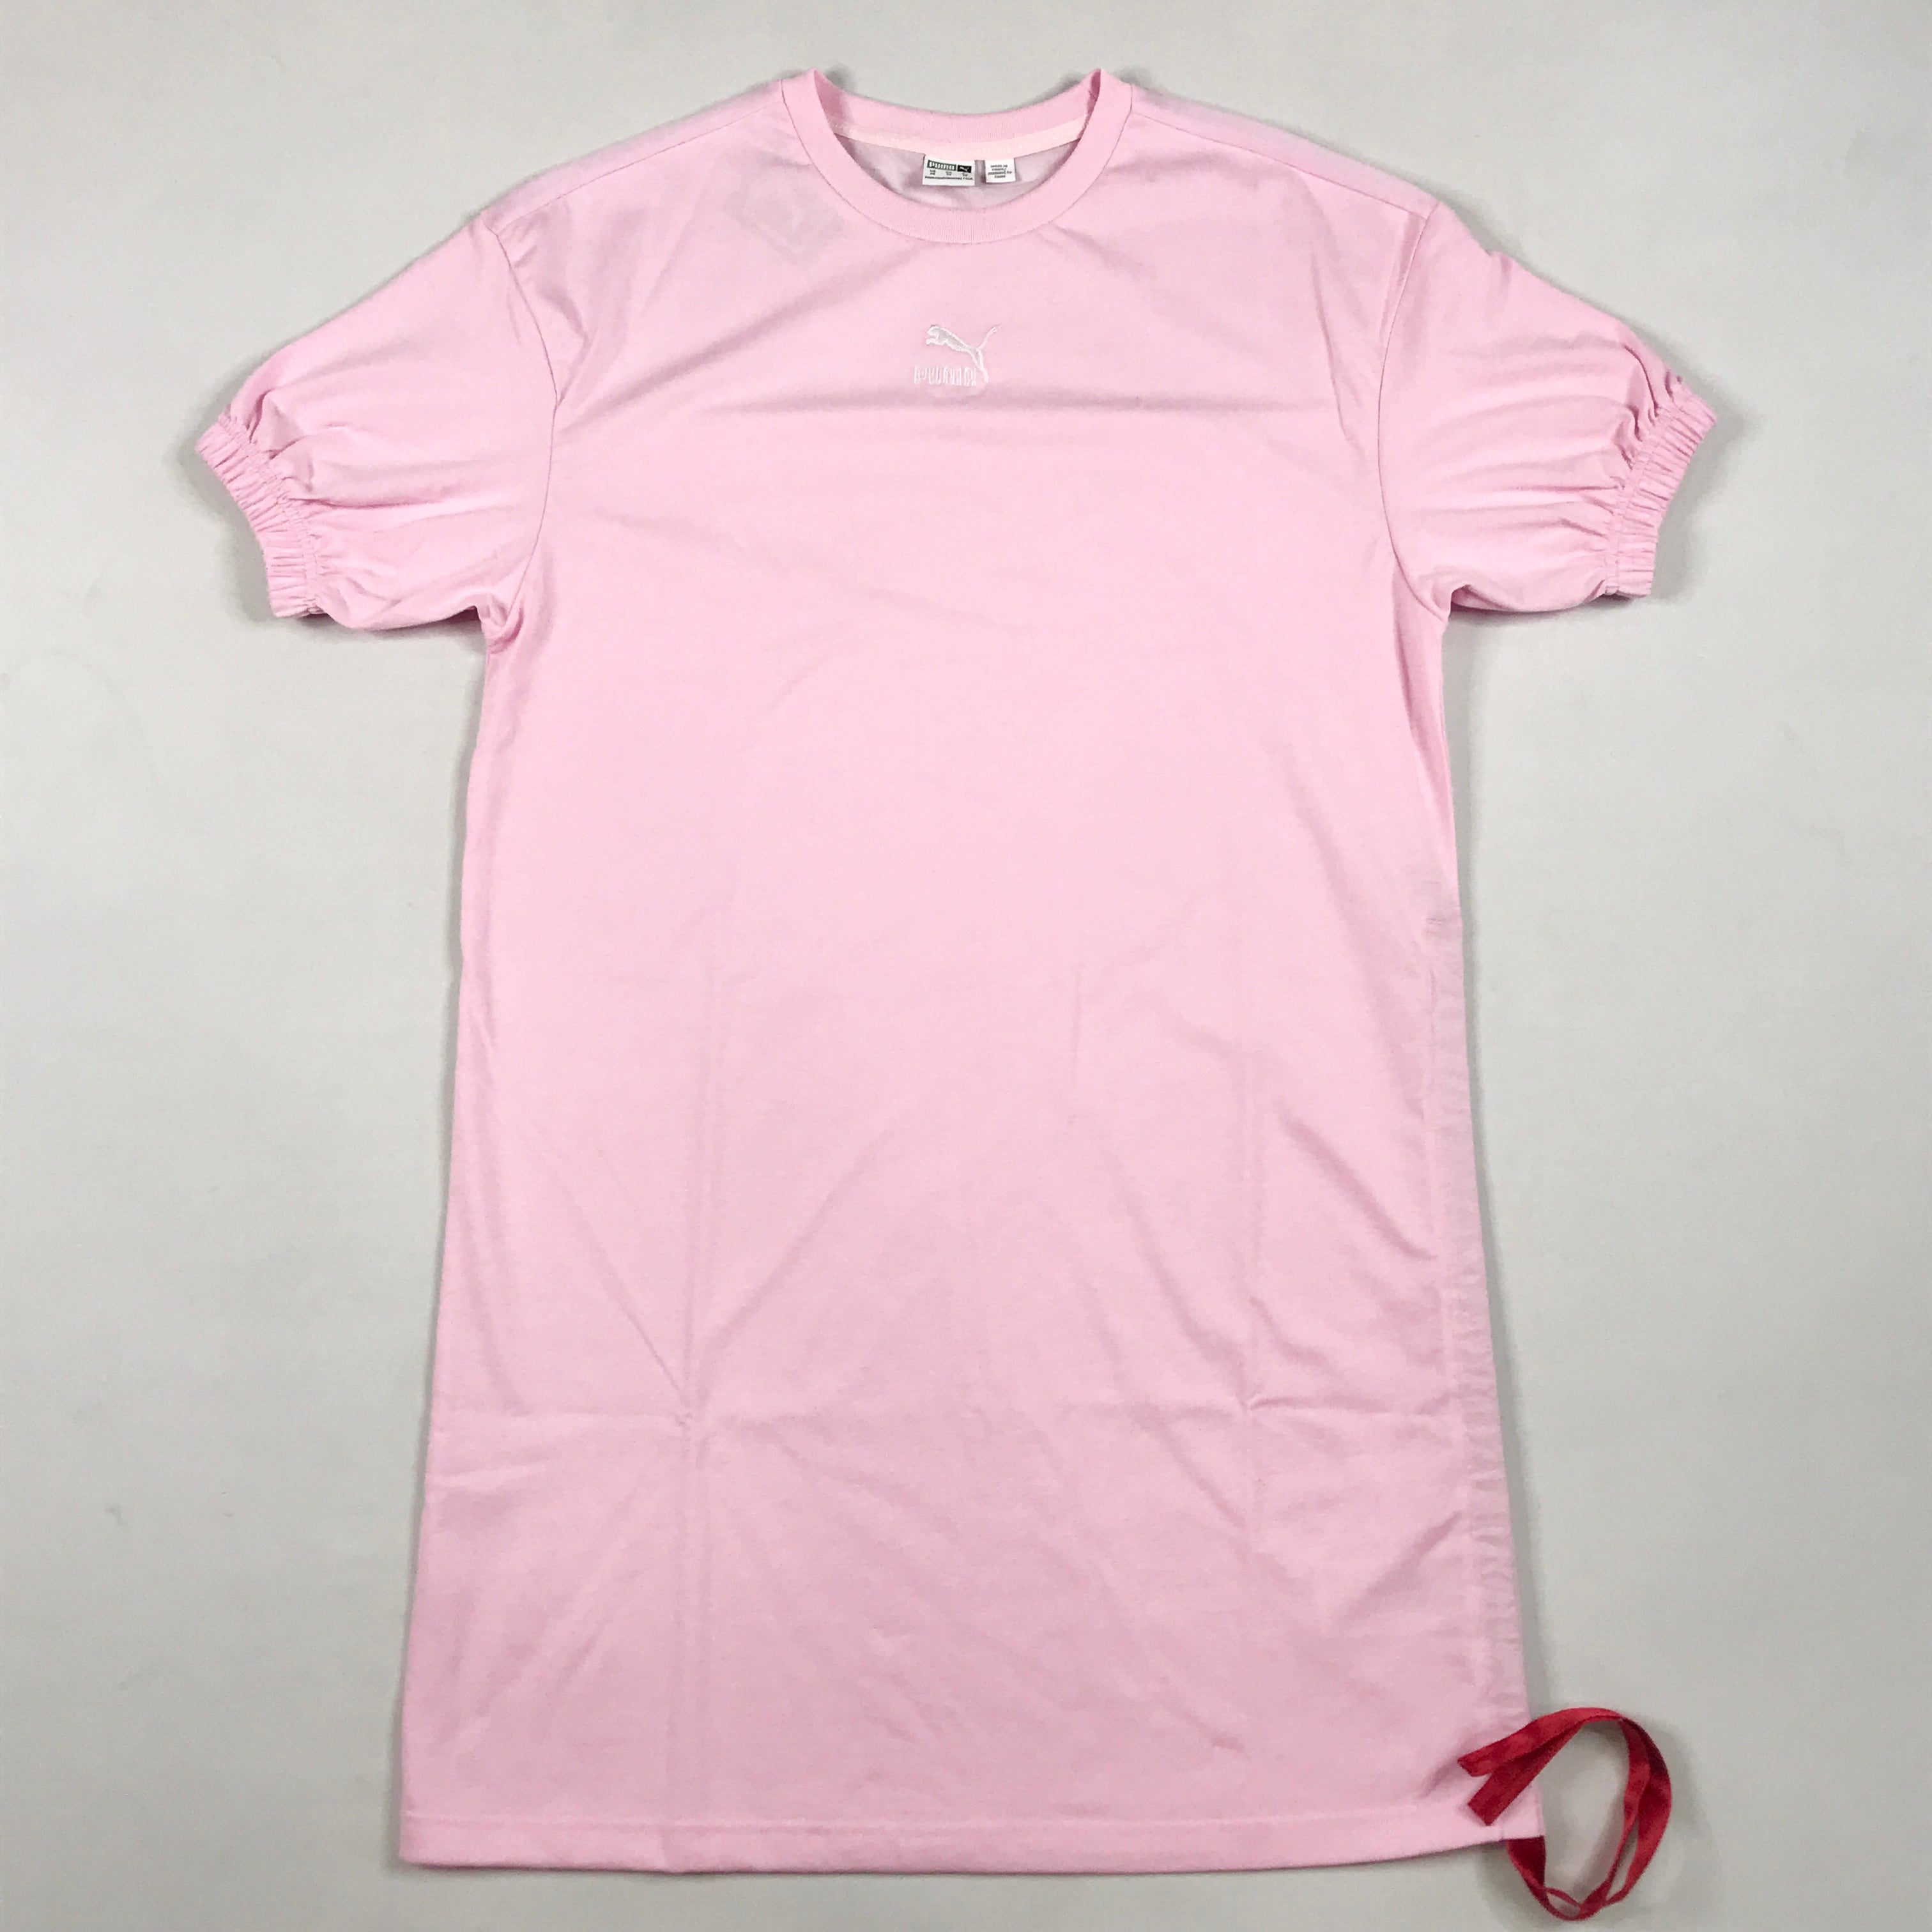 Puma PBAE tee dress in pink lady